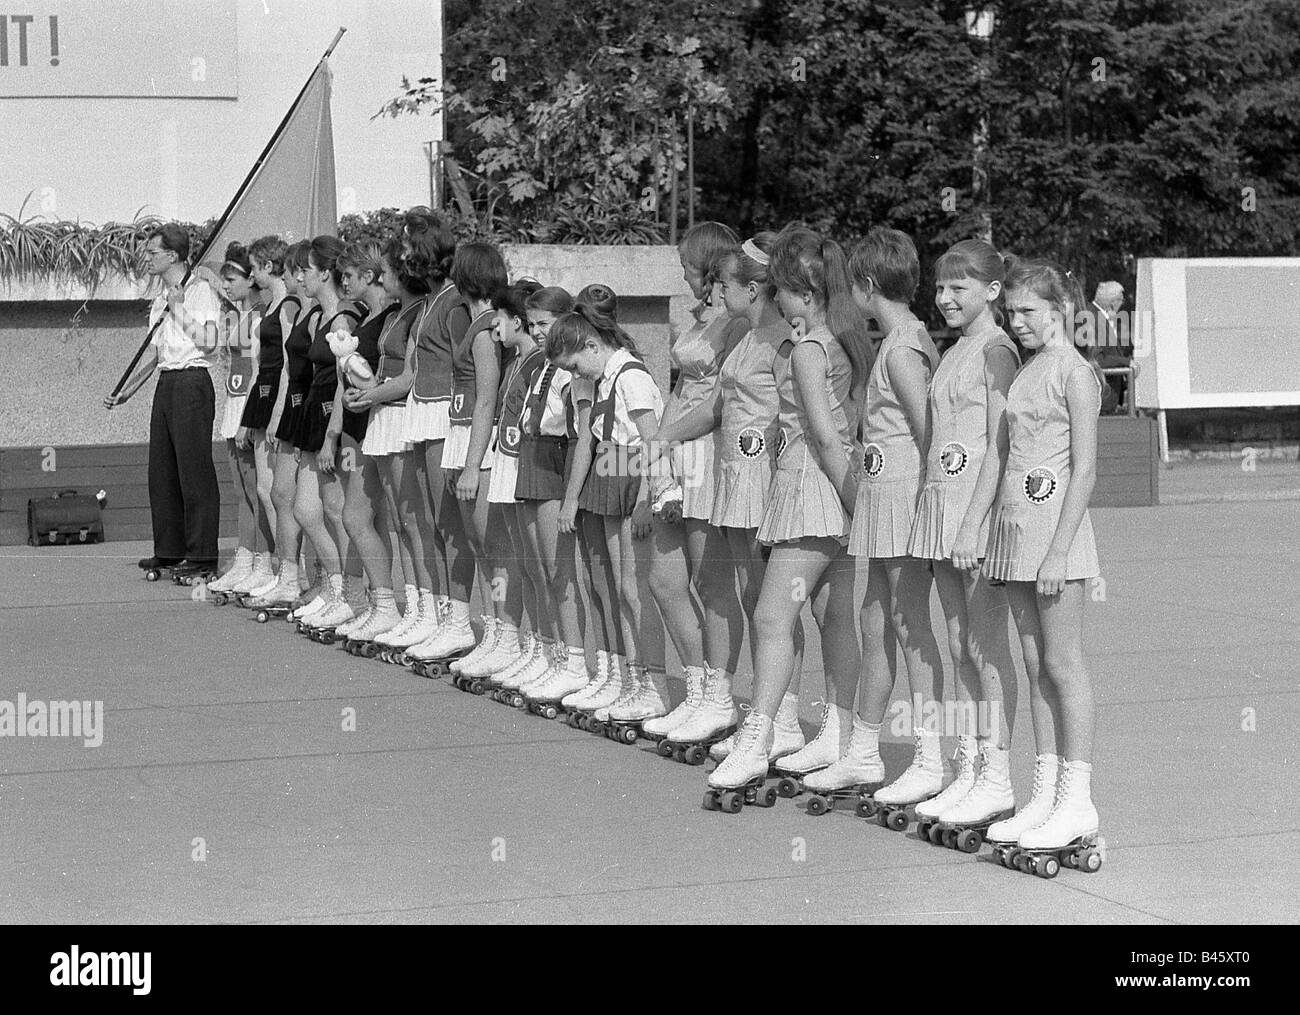 Sport, Rollschuhsport, Damenmannschaft des Ostdeutschen Rollschuhverbandes,  1963 Stockfotografie - Alamy